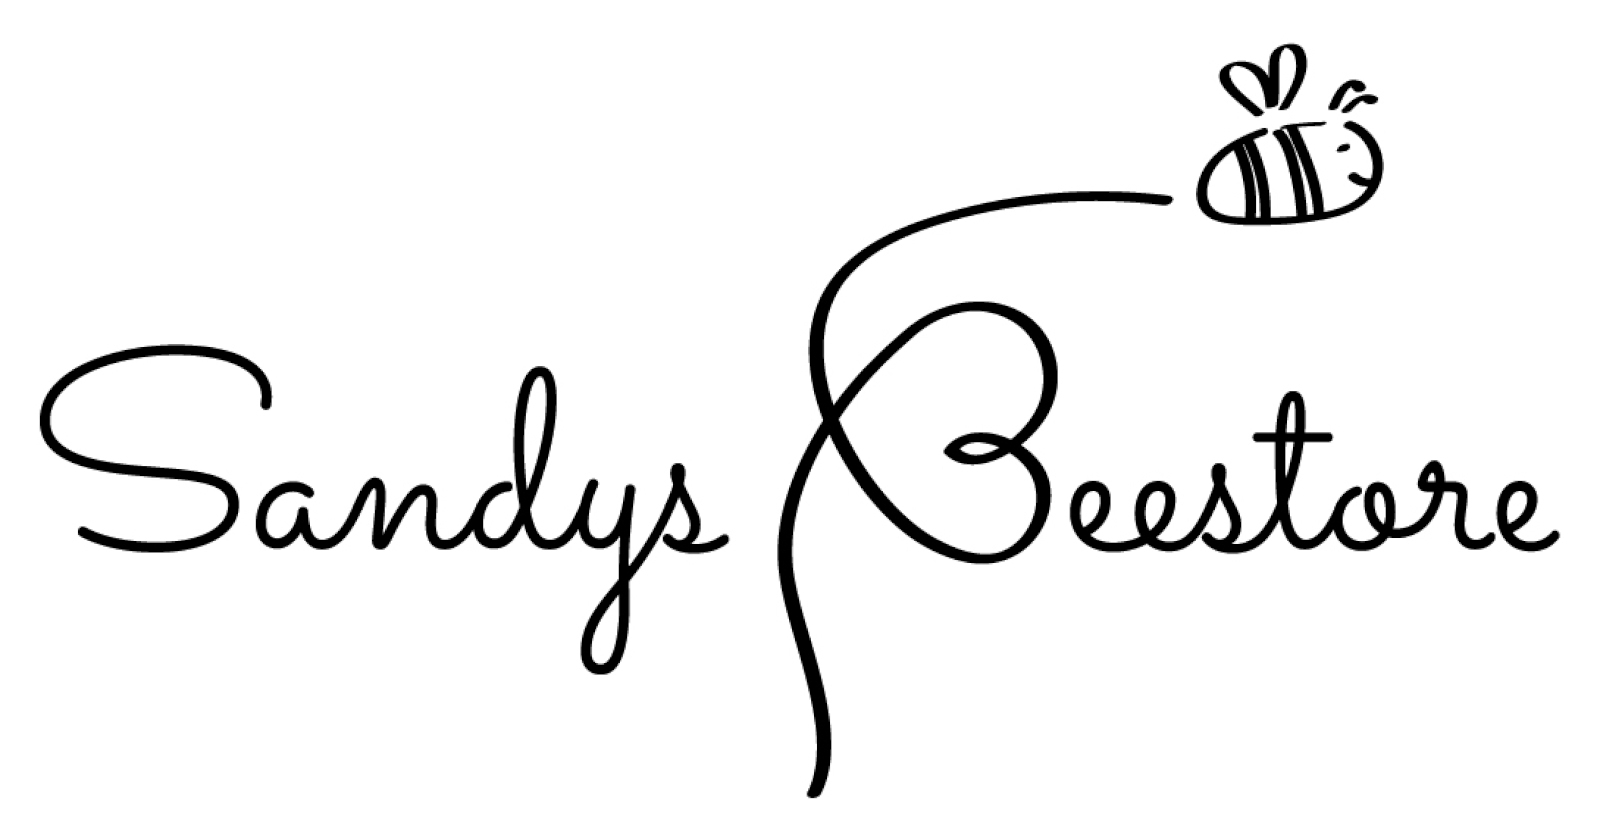 Sandys Beestore